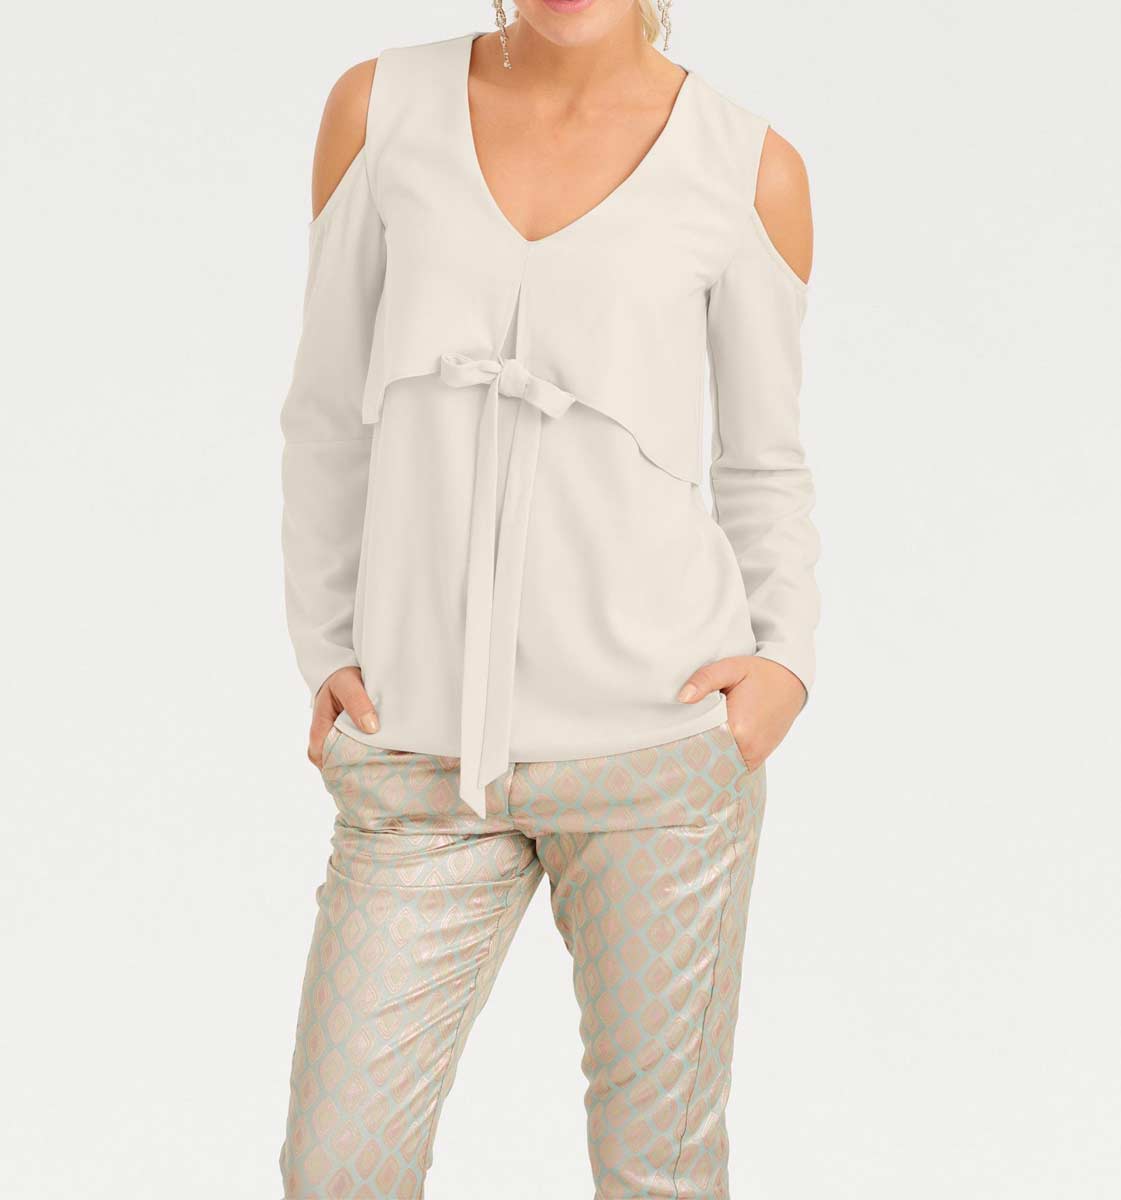 Ashley Brooke Damen Designer-Bluse mit Cut-Outs, offwhite